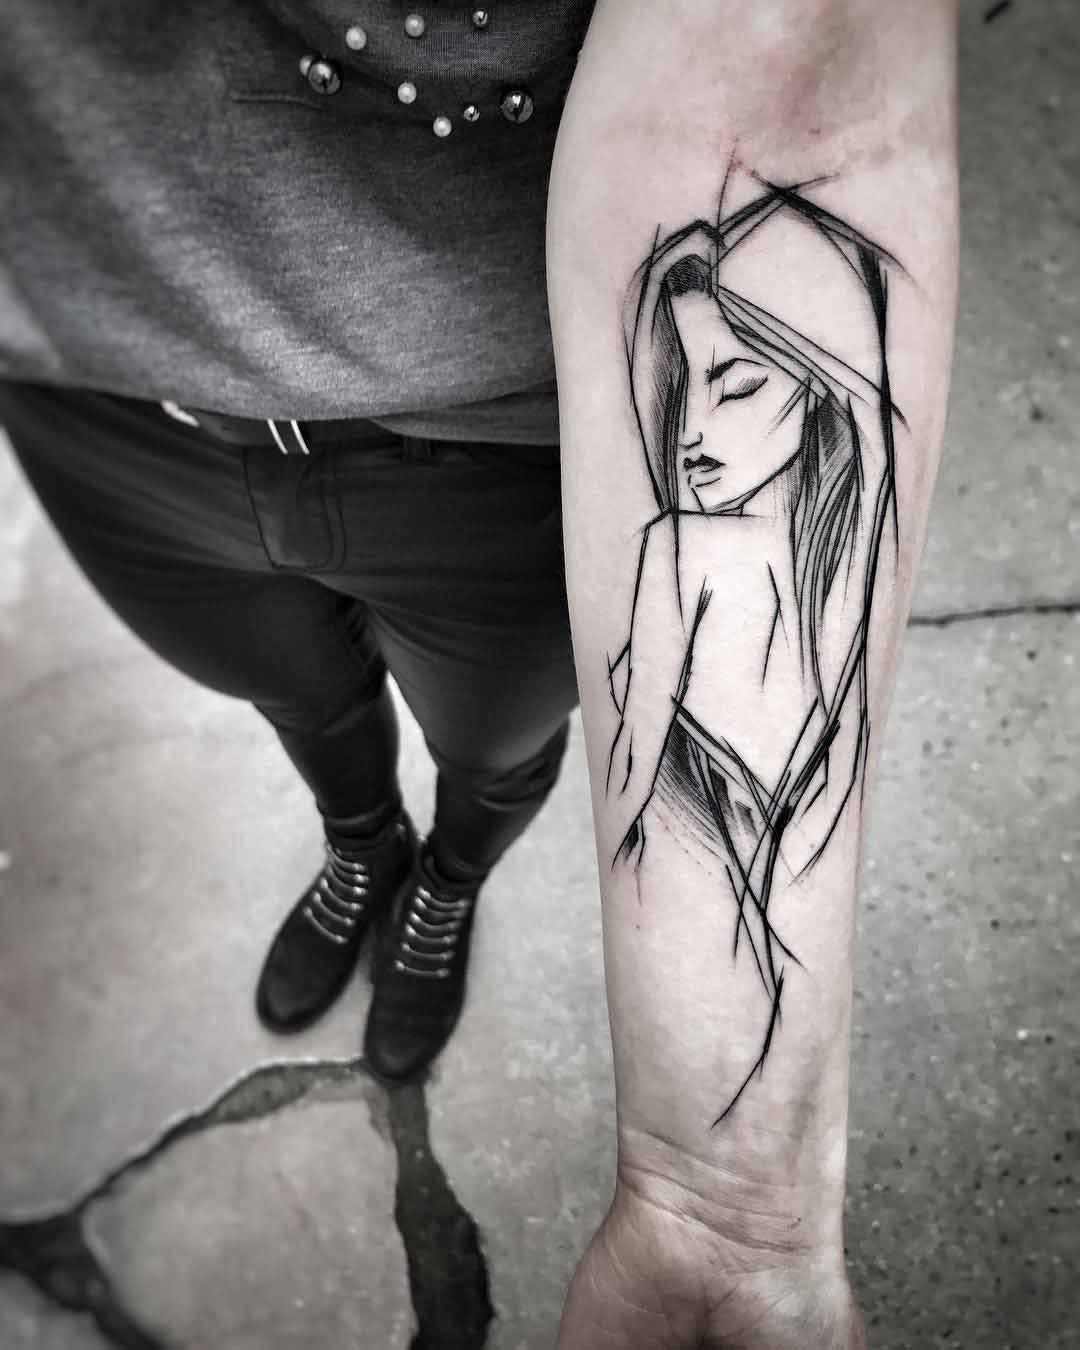 girl sketch tattoo on arm